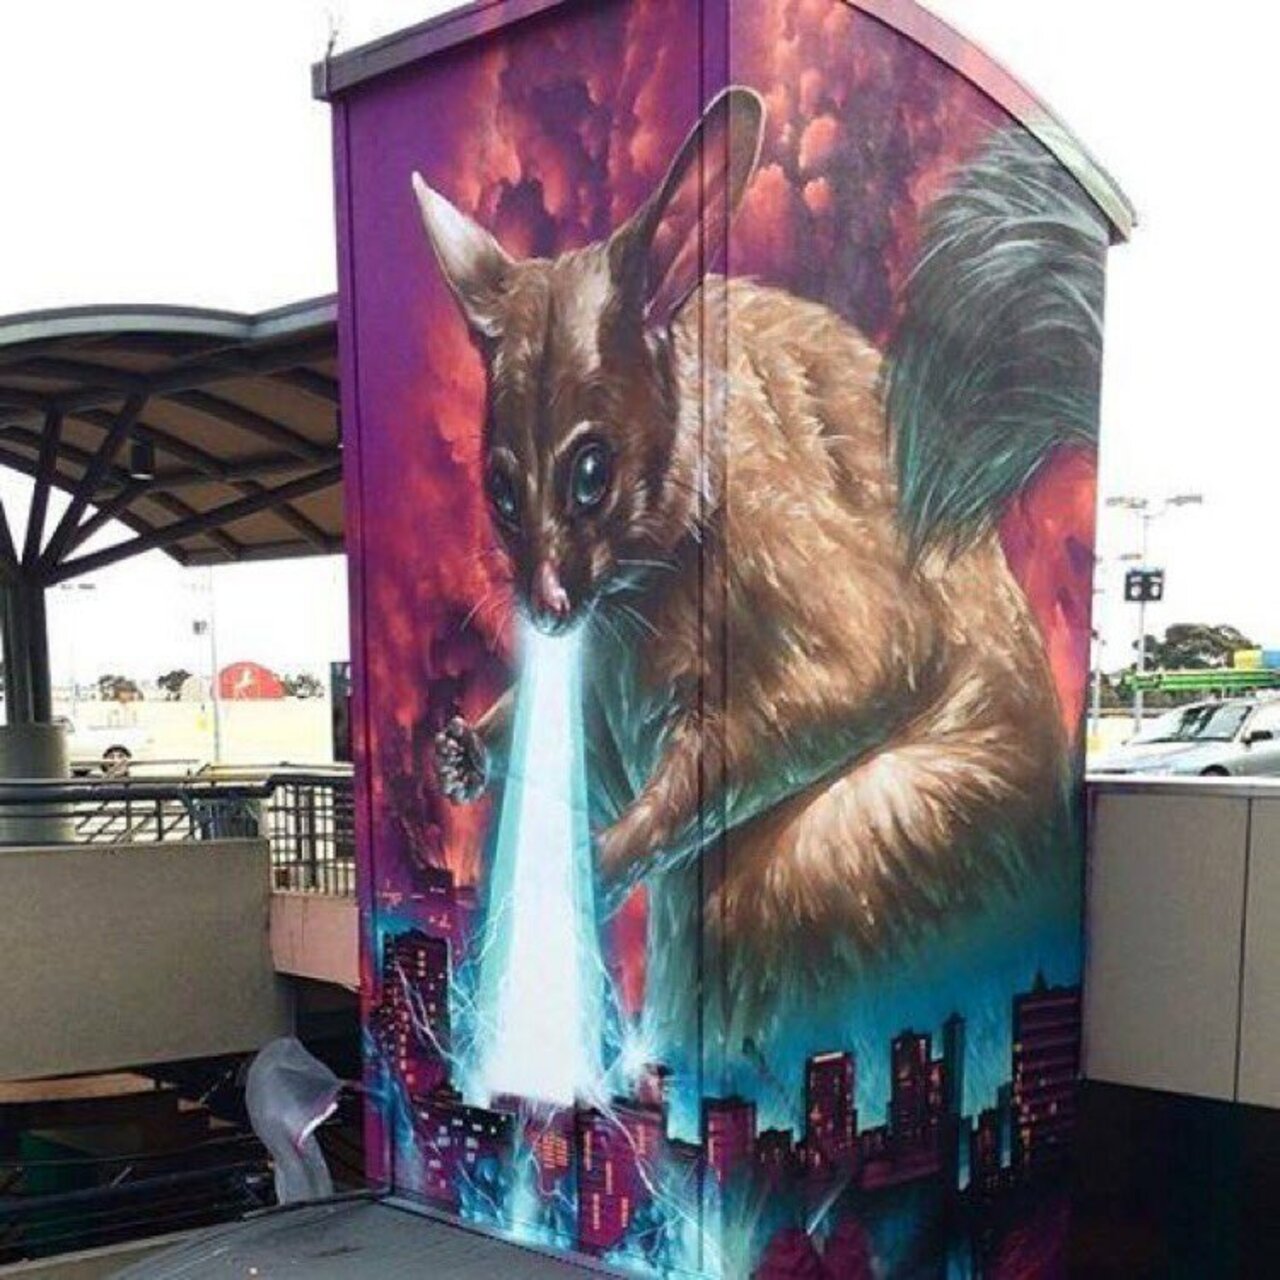 Mural by Sofles, Melbourne, Australia #Streetart #urbanart #graffiti #mural #art #Melbourne #Australia https://t.co/EqscdIULgw